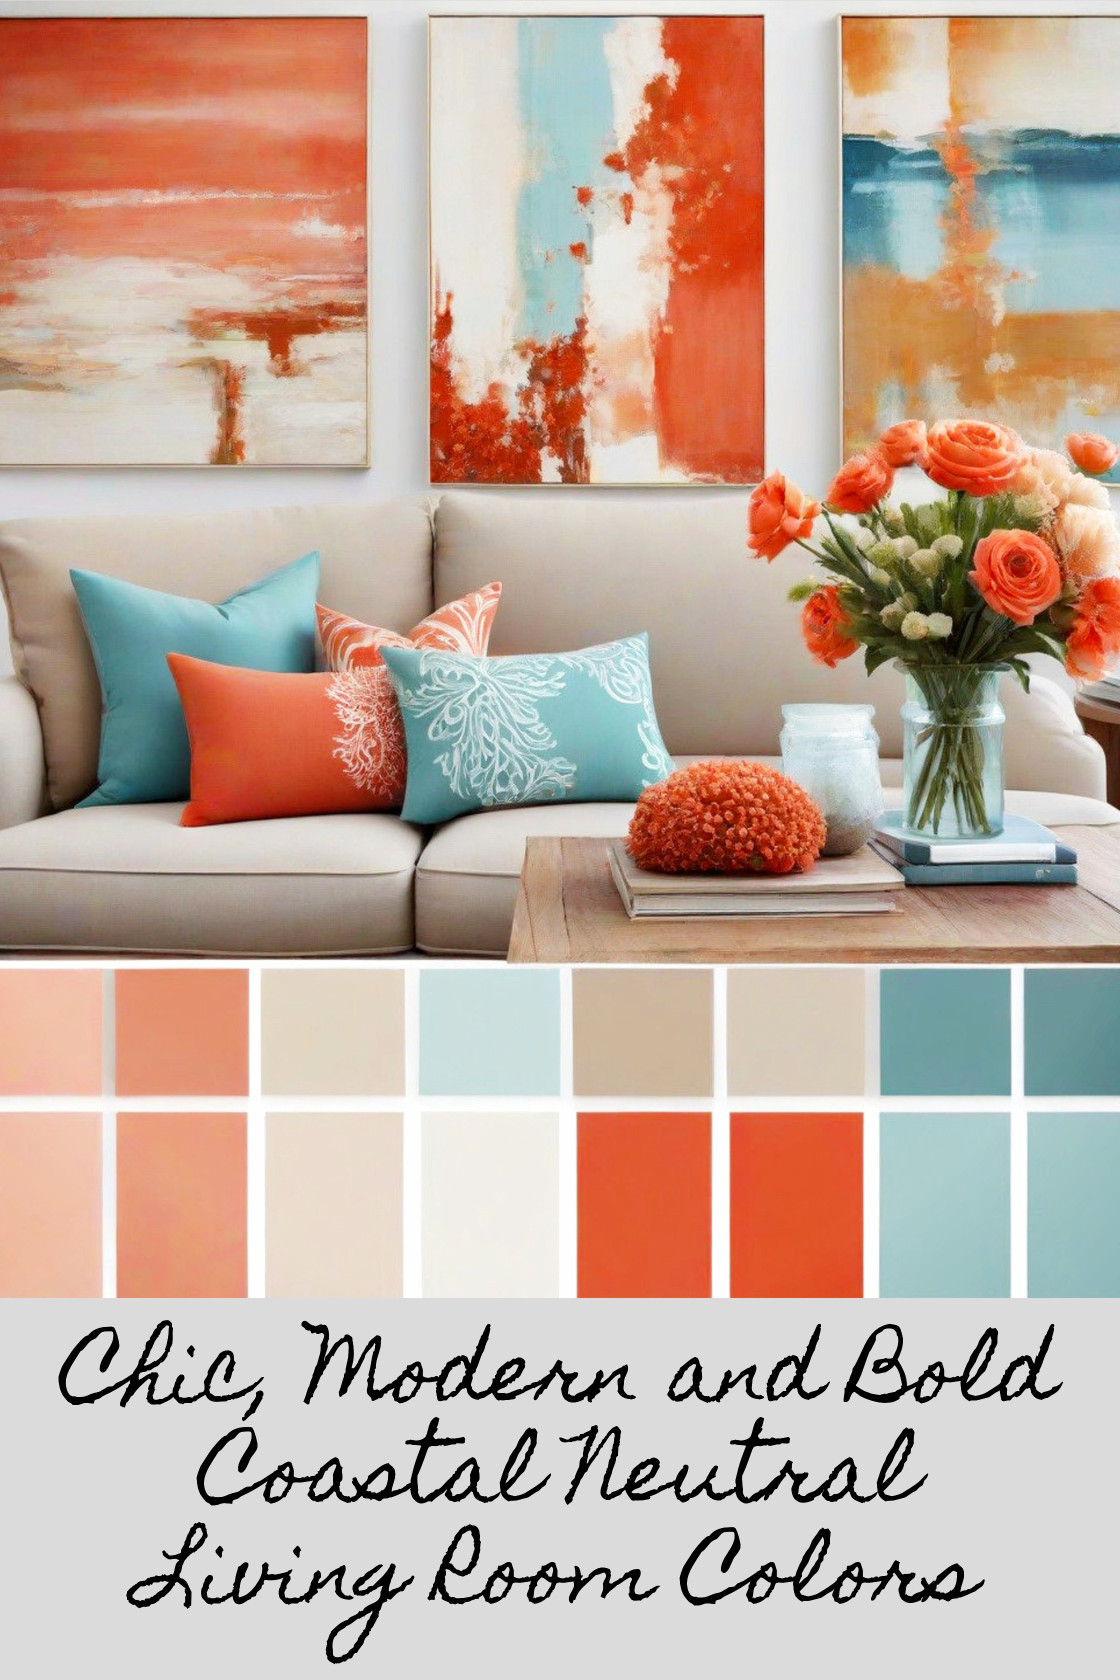 Chic Modern Coastal Neutral Living Room Colors